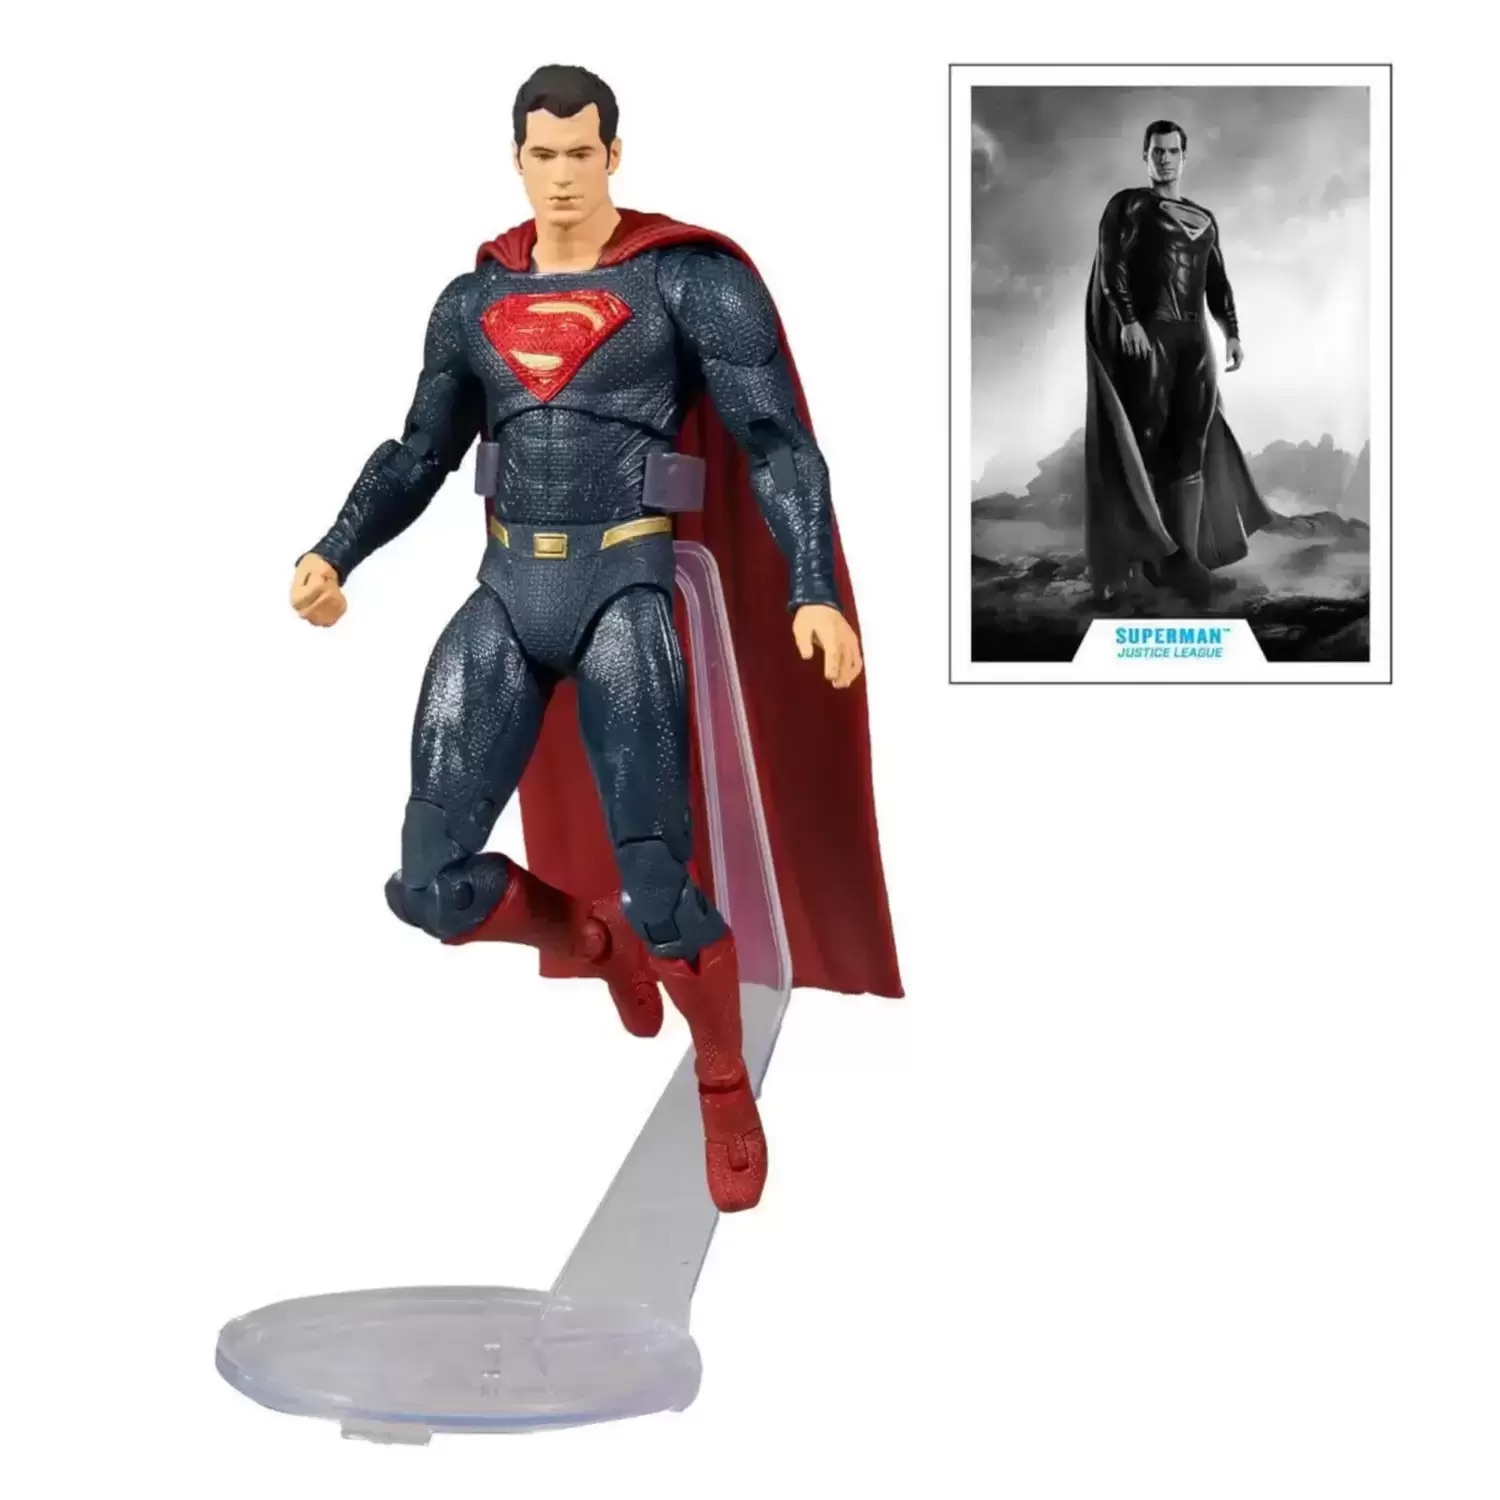 Batman V Superman Dawn of Justice Multiverse 6inch Lex Luthor Figure for sale online 